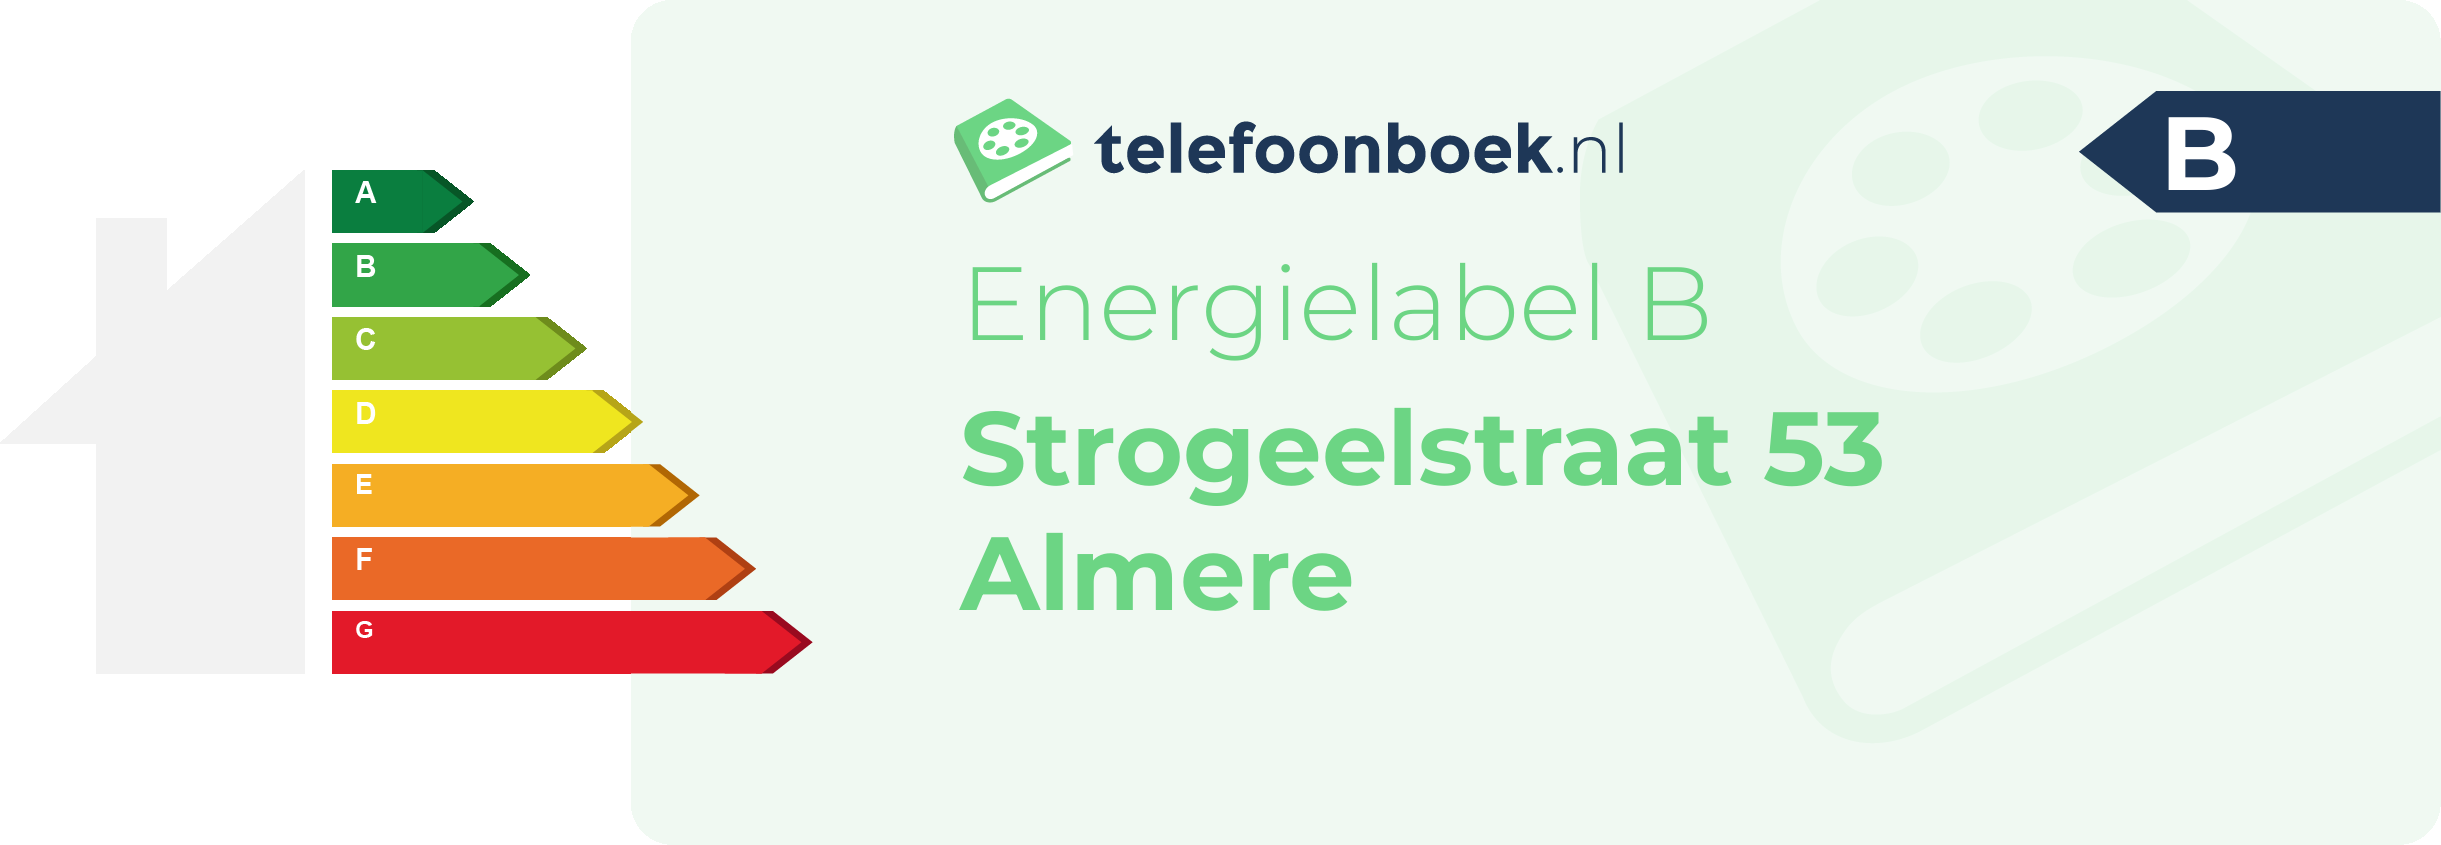 Energielabel Strogeelstraat 53 Almere